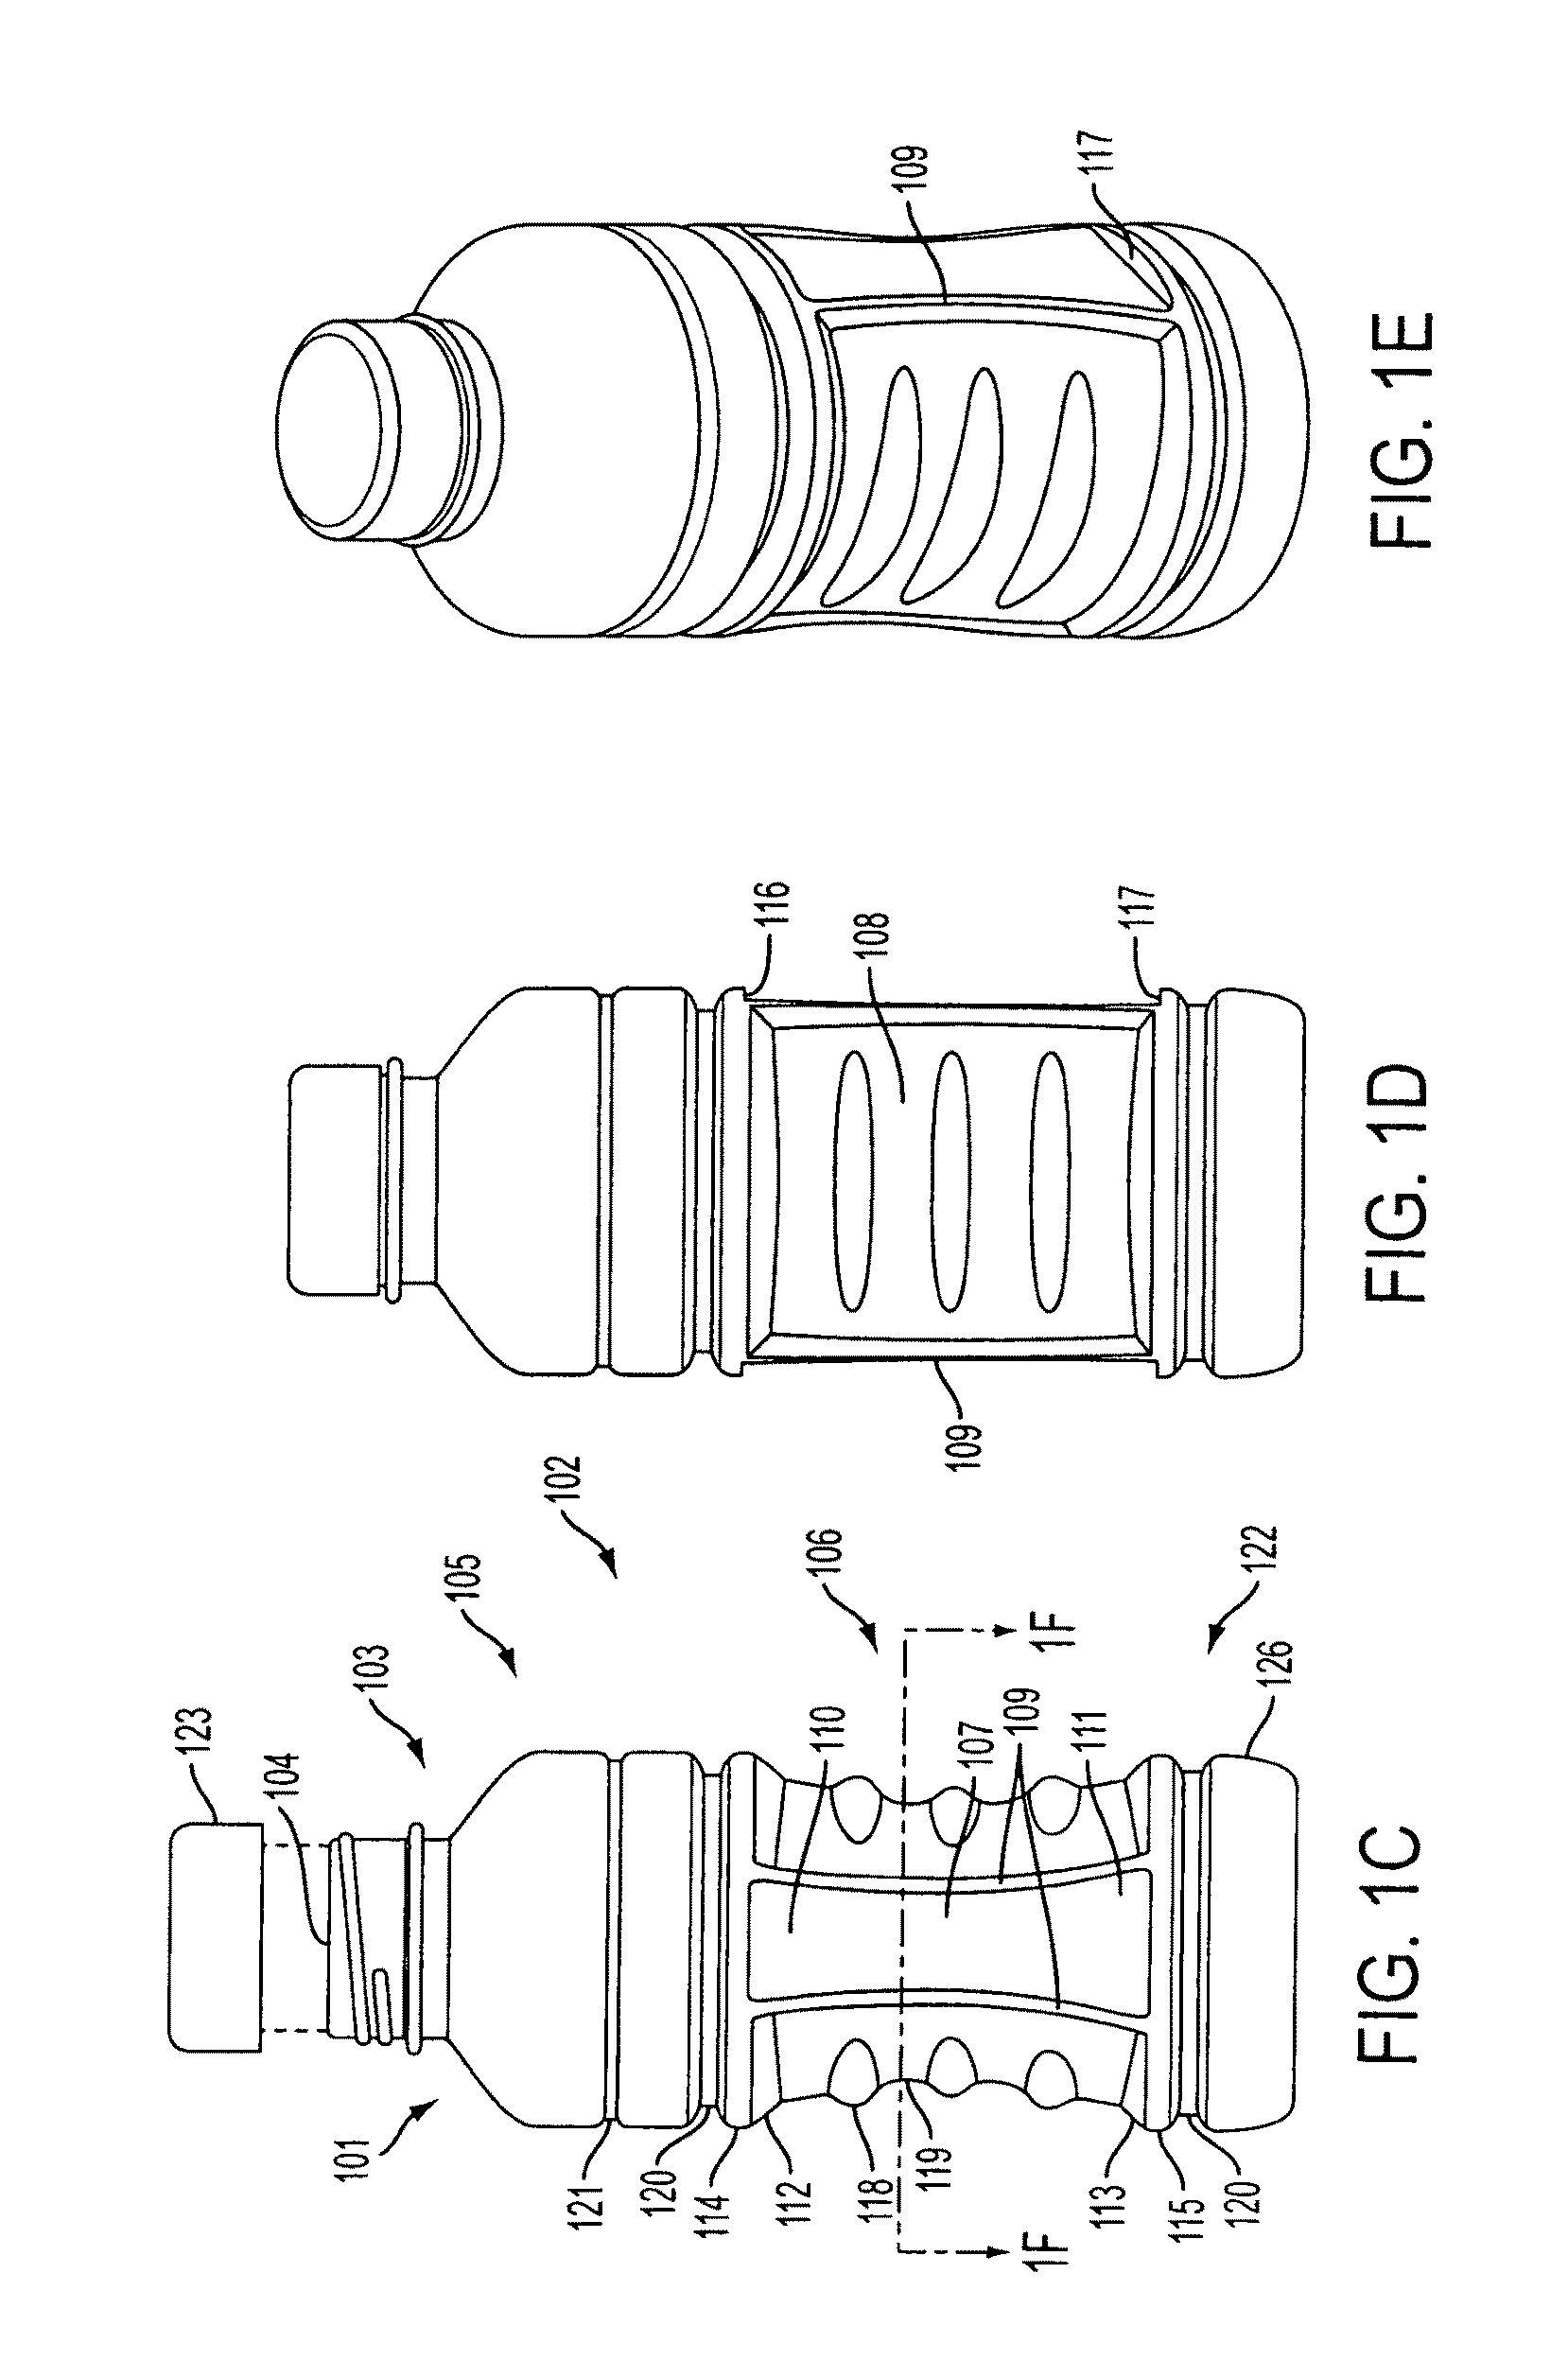 Pressure container with differential vacuum panels